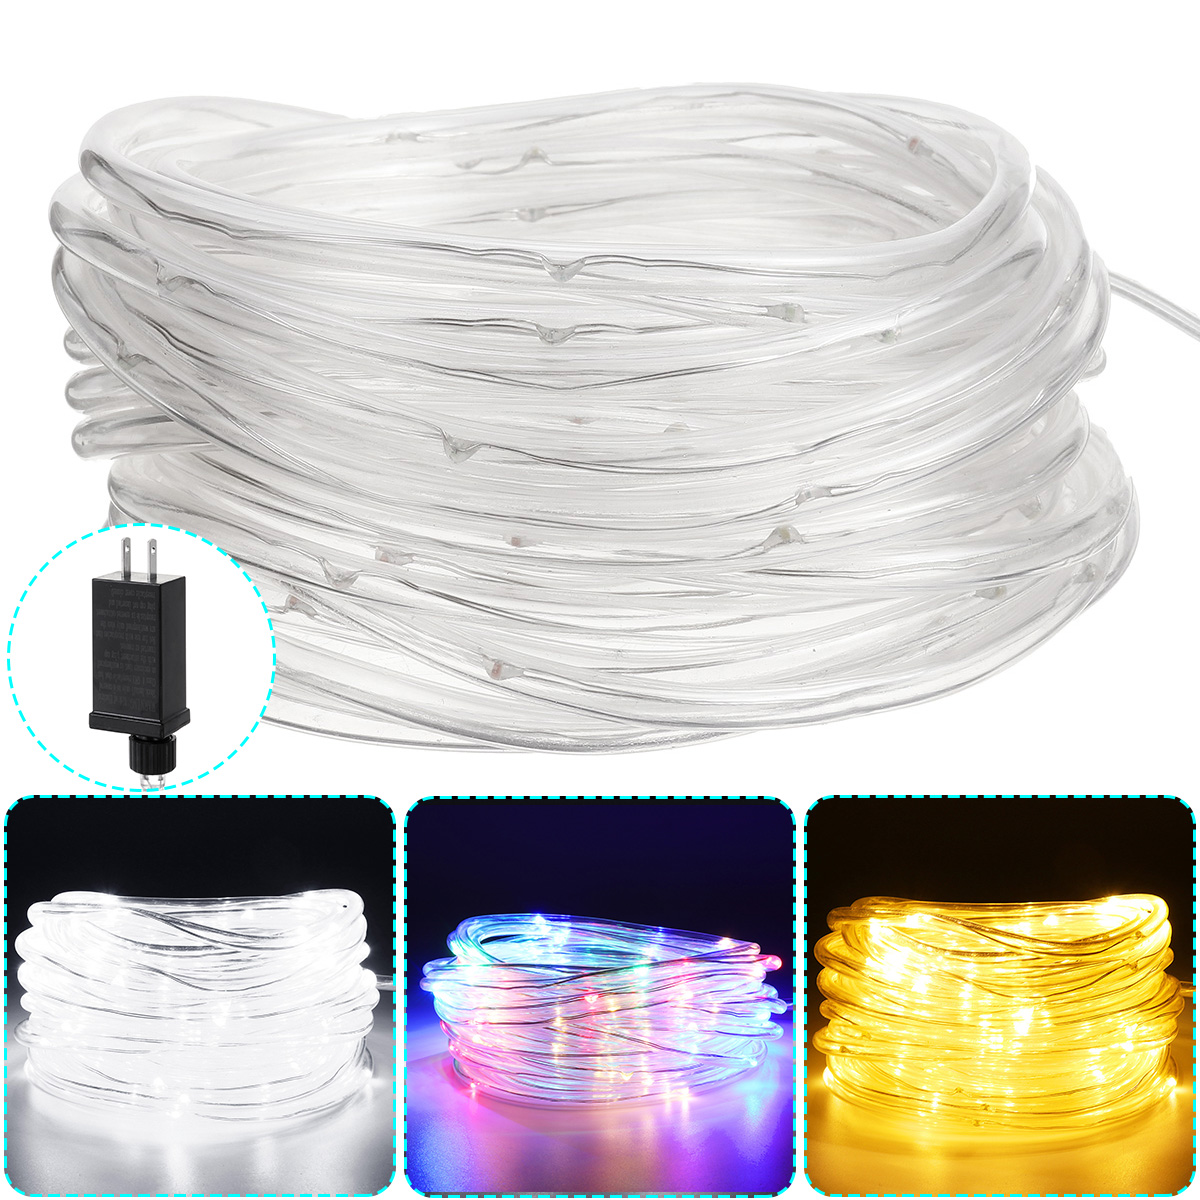 10M-100LED-Outdoor-Tube-Rope-Strip-String-Light-RGB-Lamp-Xmas-Home-Decor-Lights-with-US-Plug-1795568-2